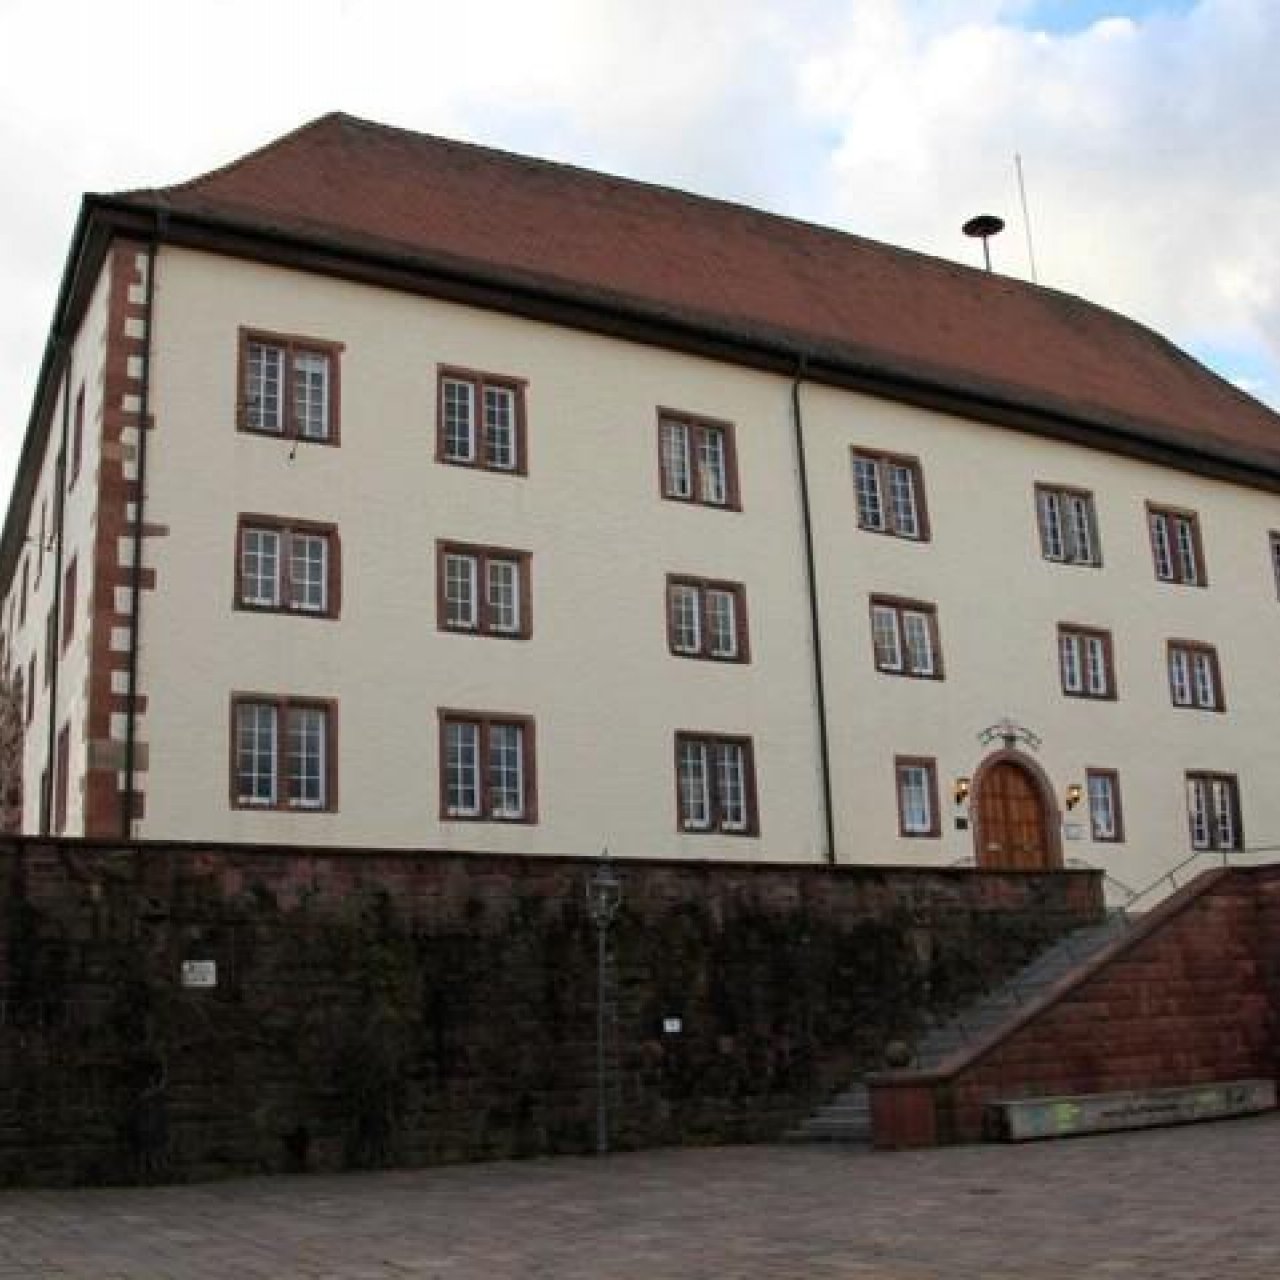 Burg (Schloss) Walldürn